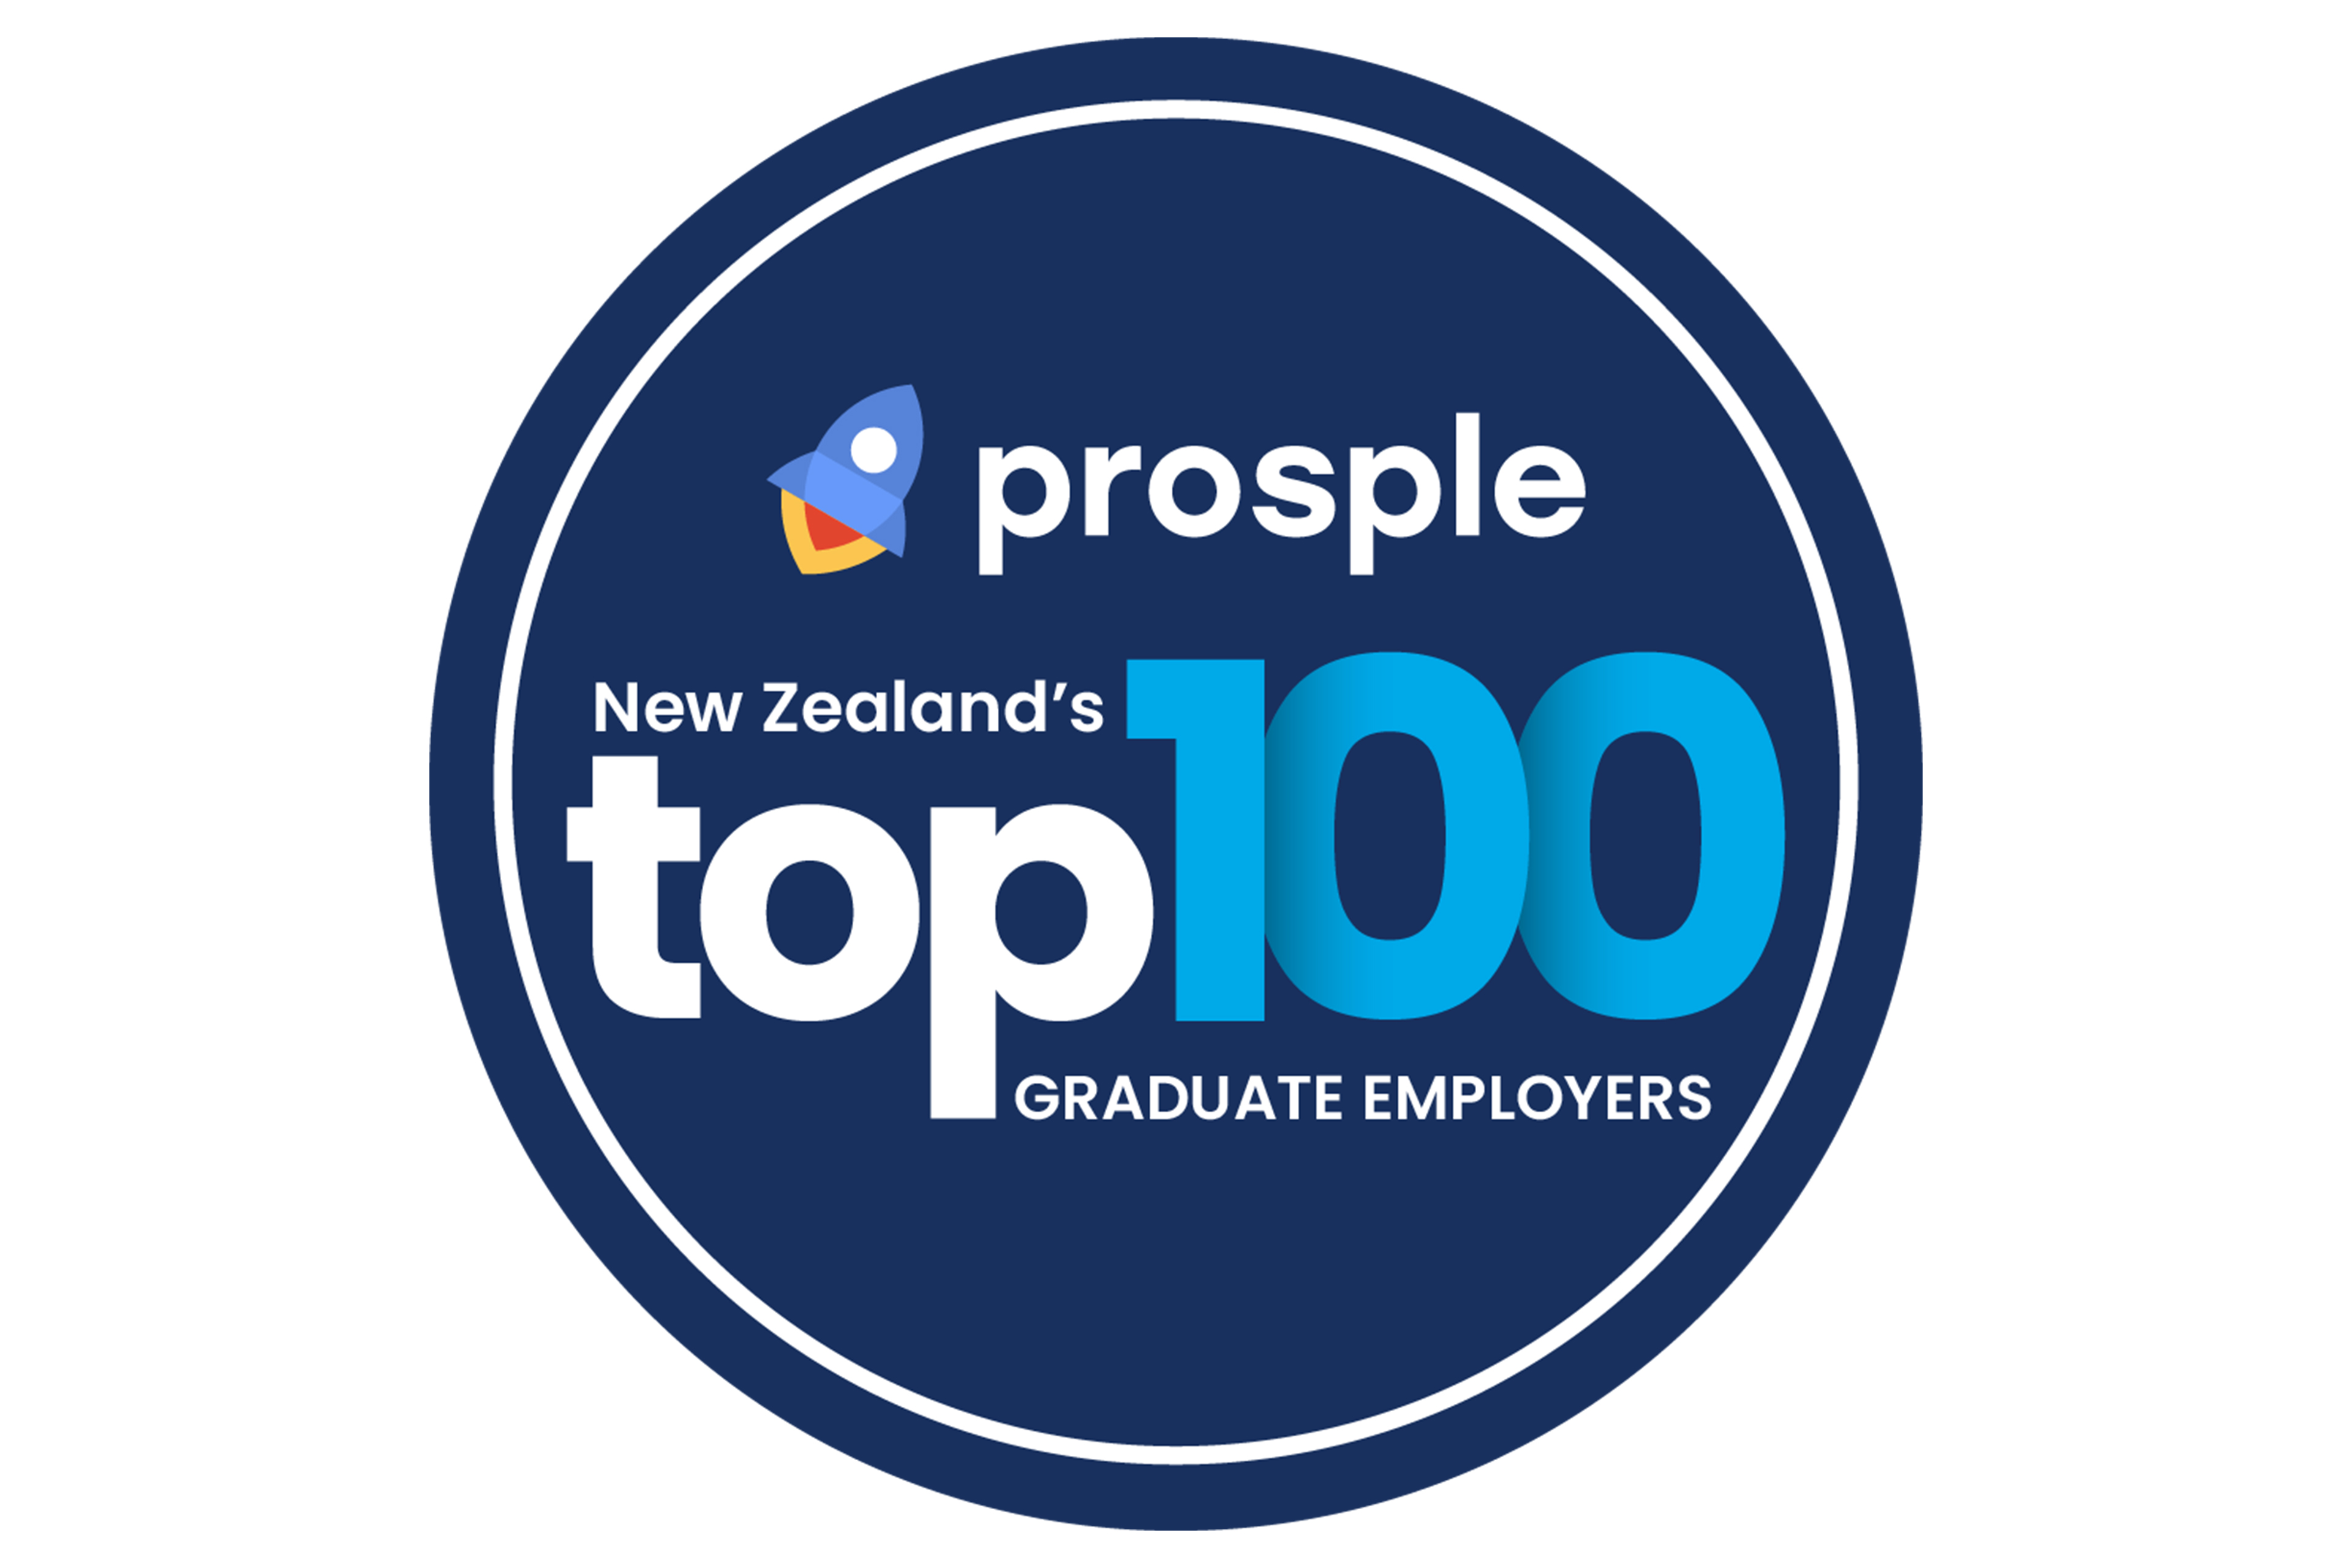 2023 New Zealand top 100 graduate employers accounting and advisory logo